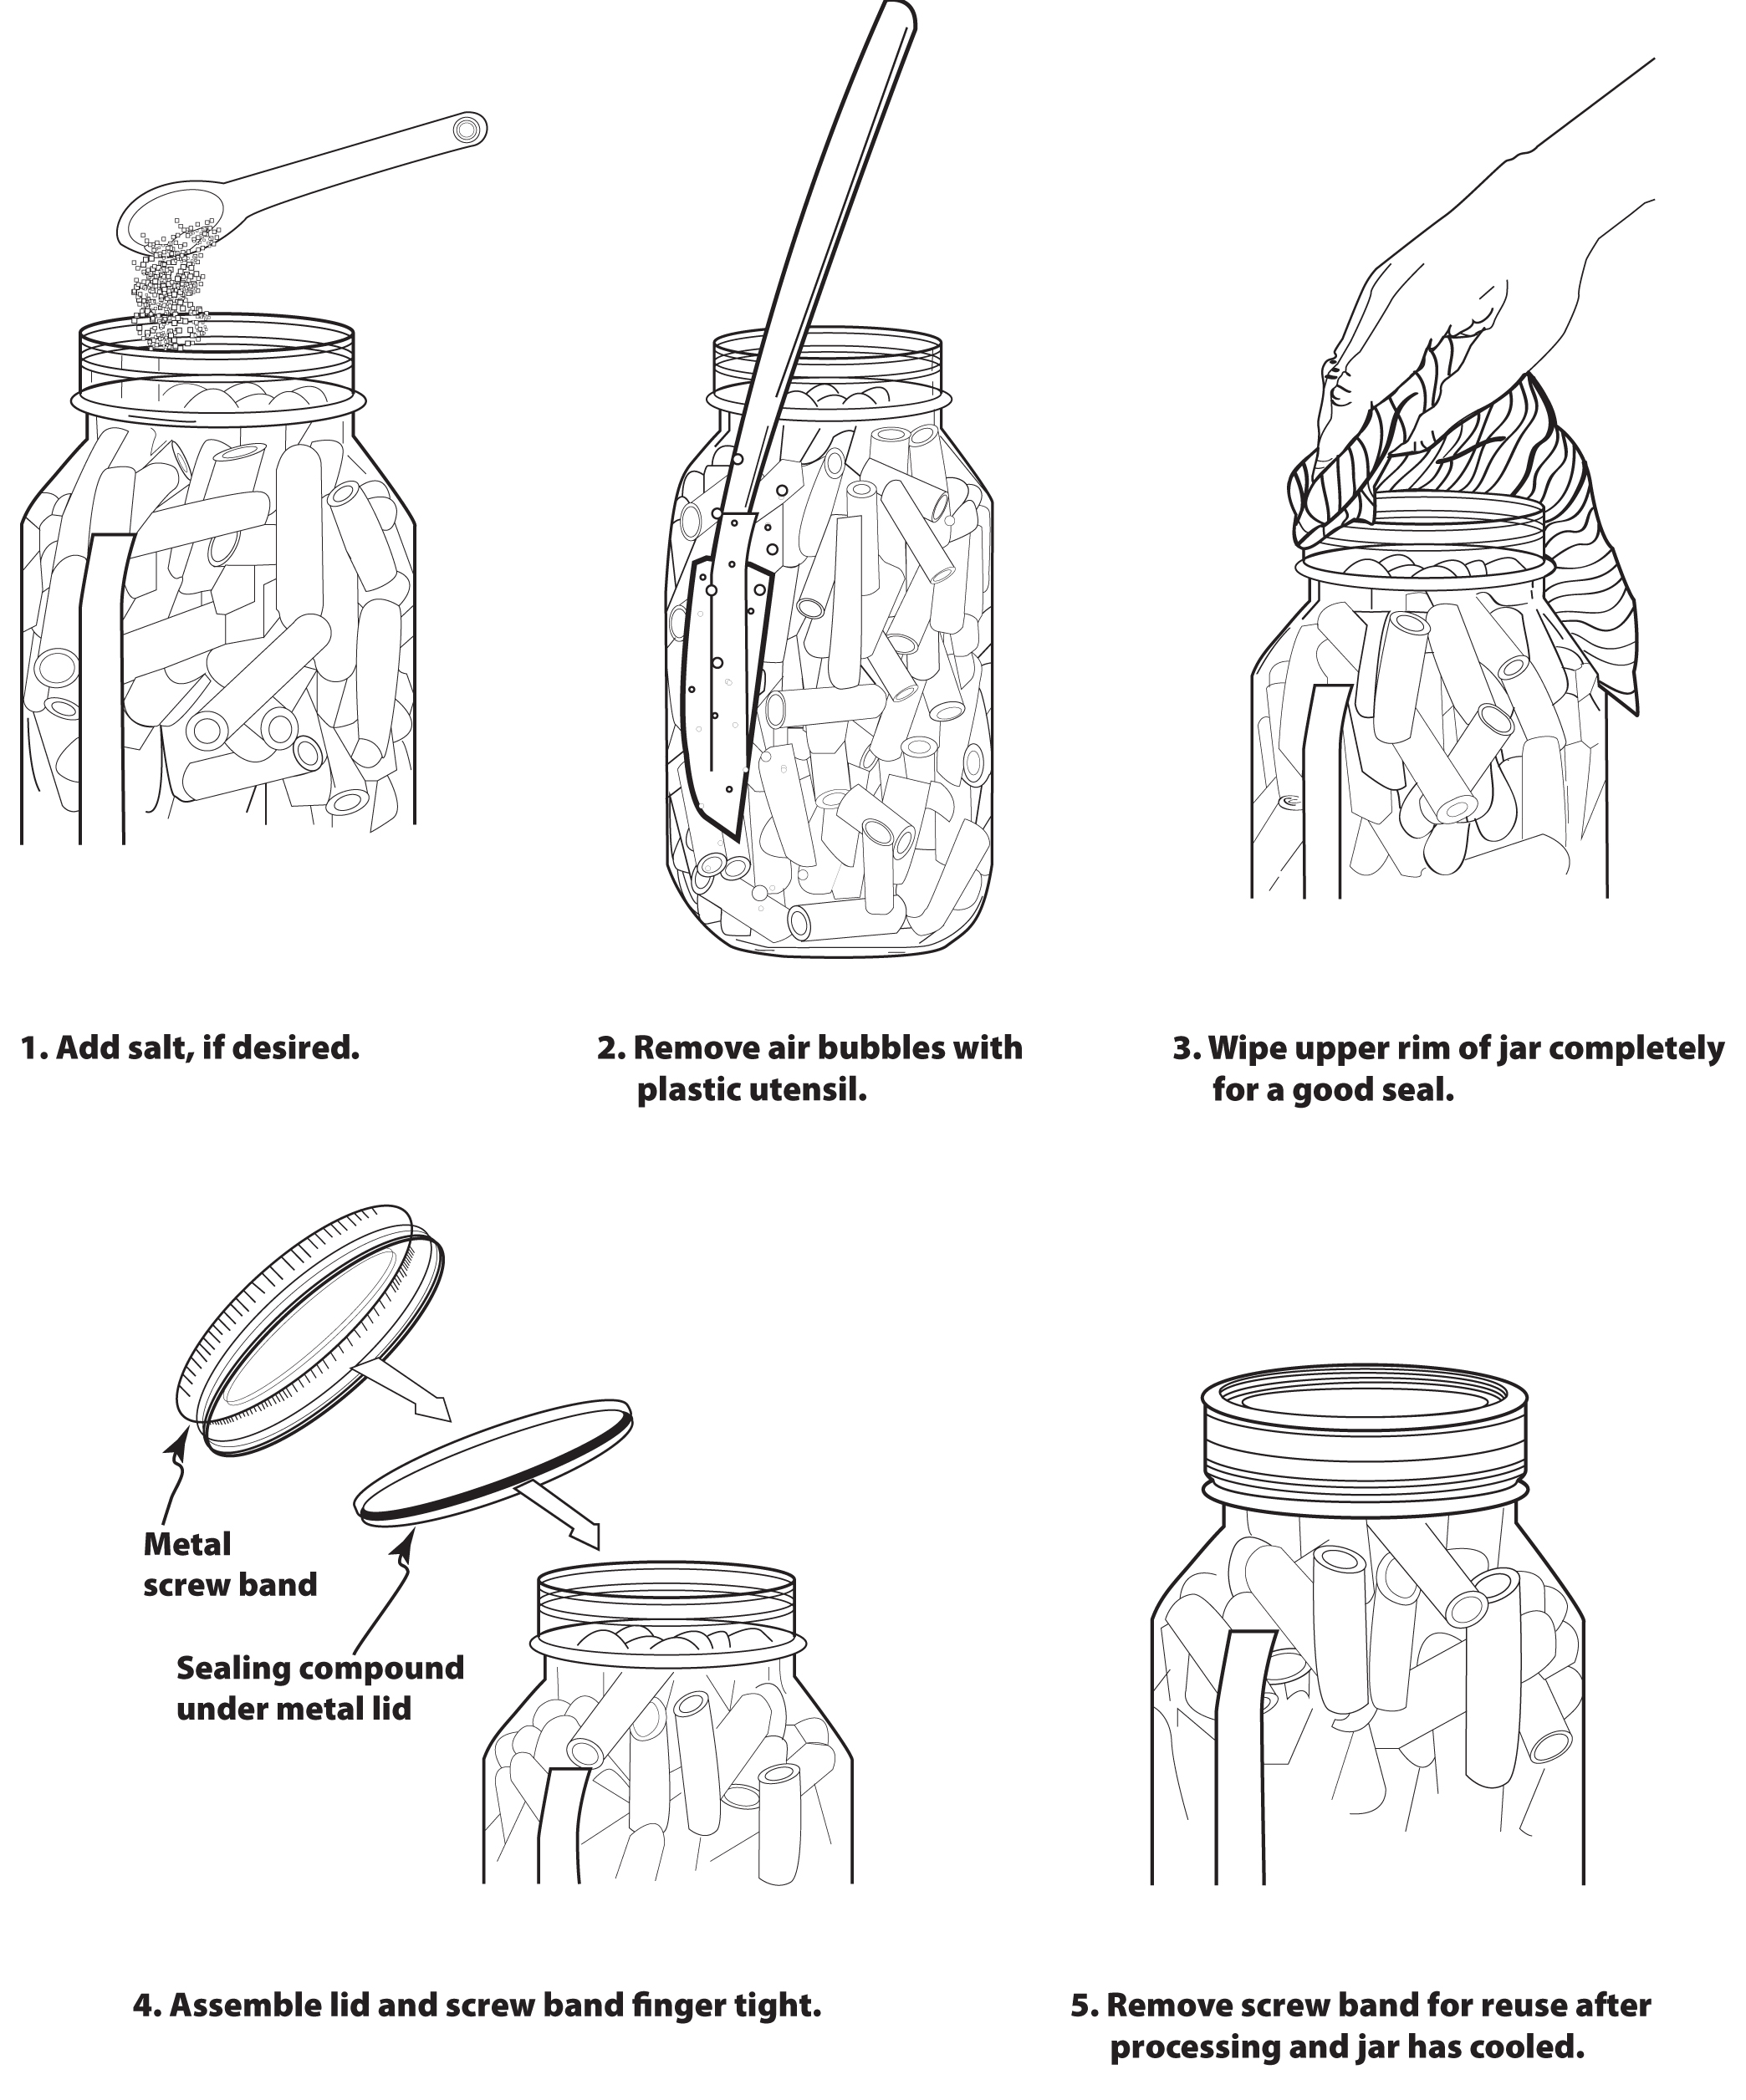 Illustration showing procedure for filling canning jars before processing